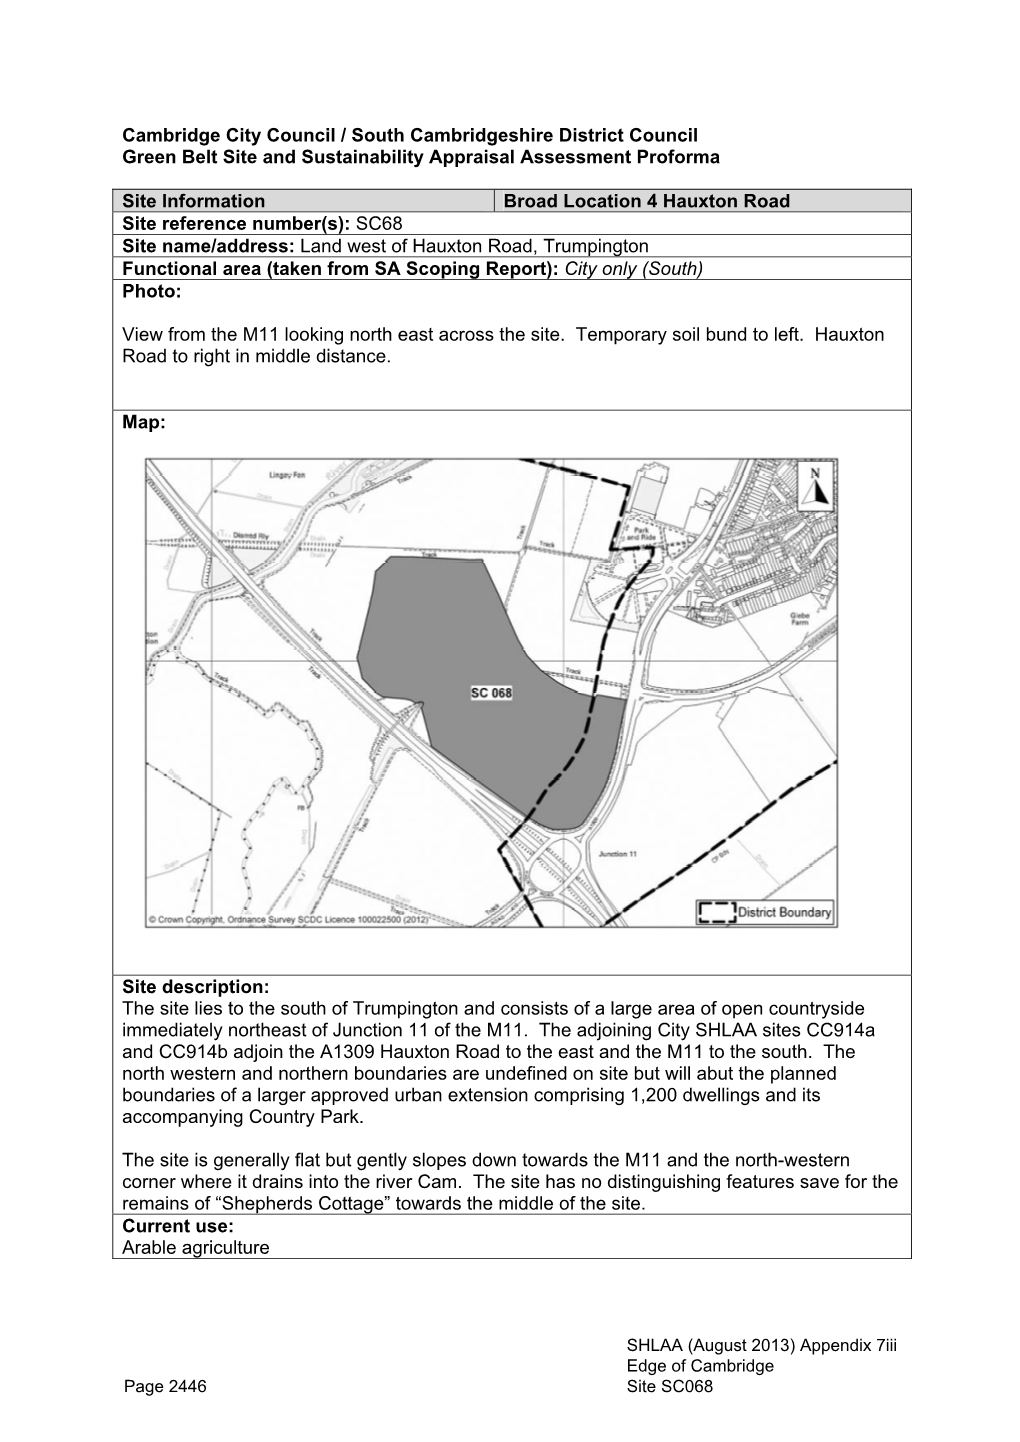 Cambridge City Council / South Cambridgeshire District Council Green Belt Site and Sustainability Appraisal Assessment Proforma